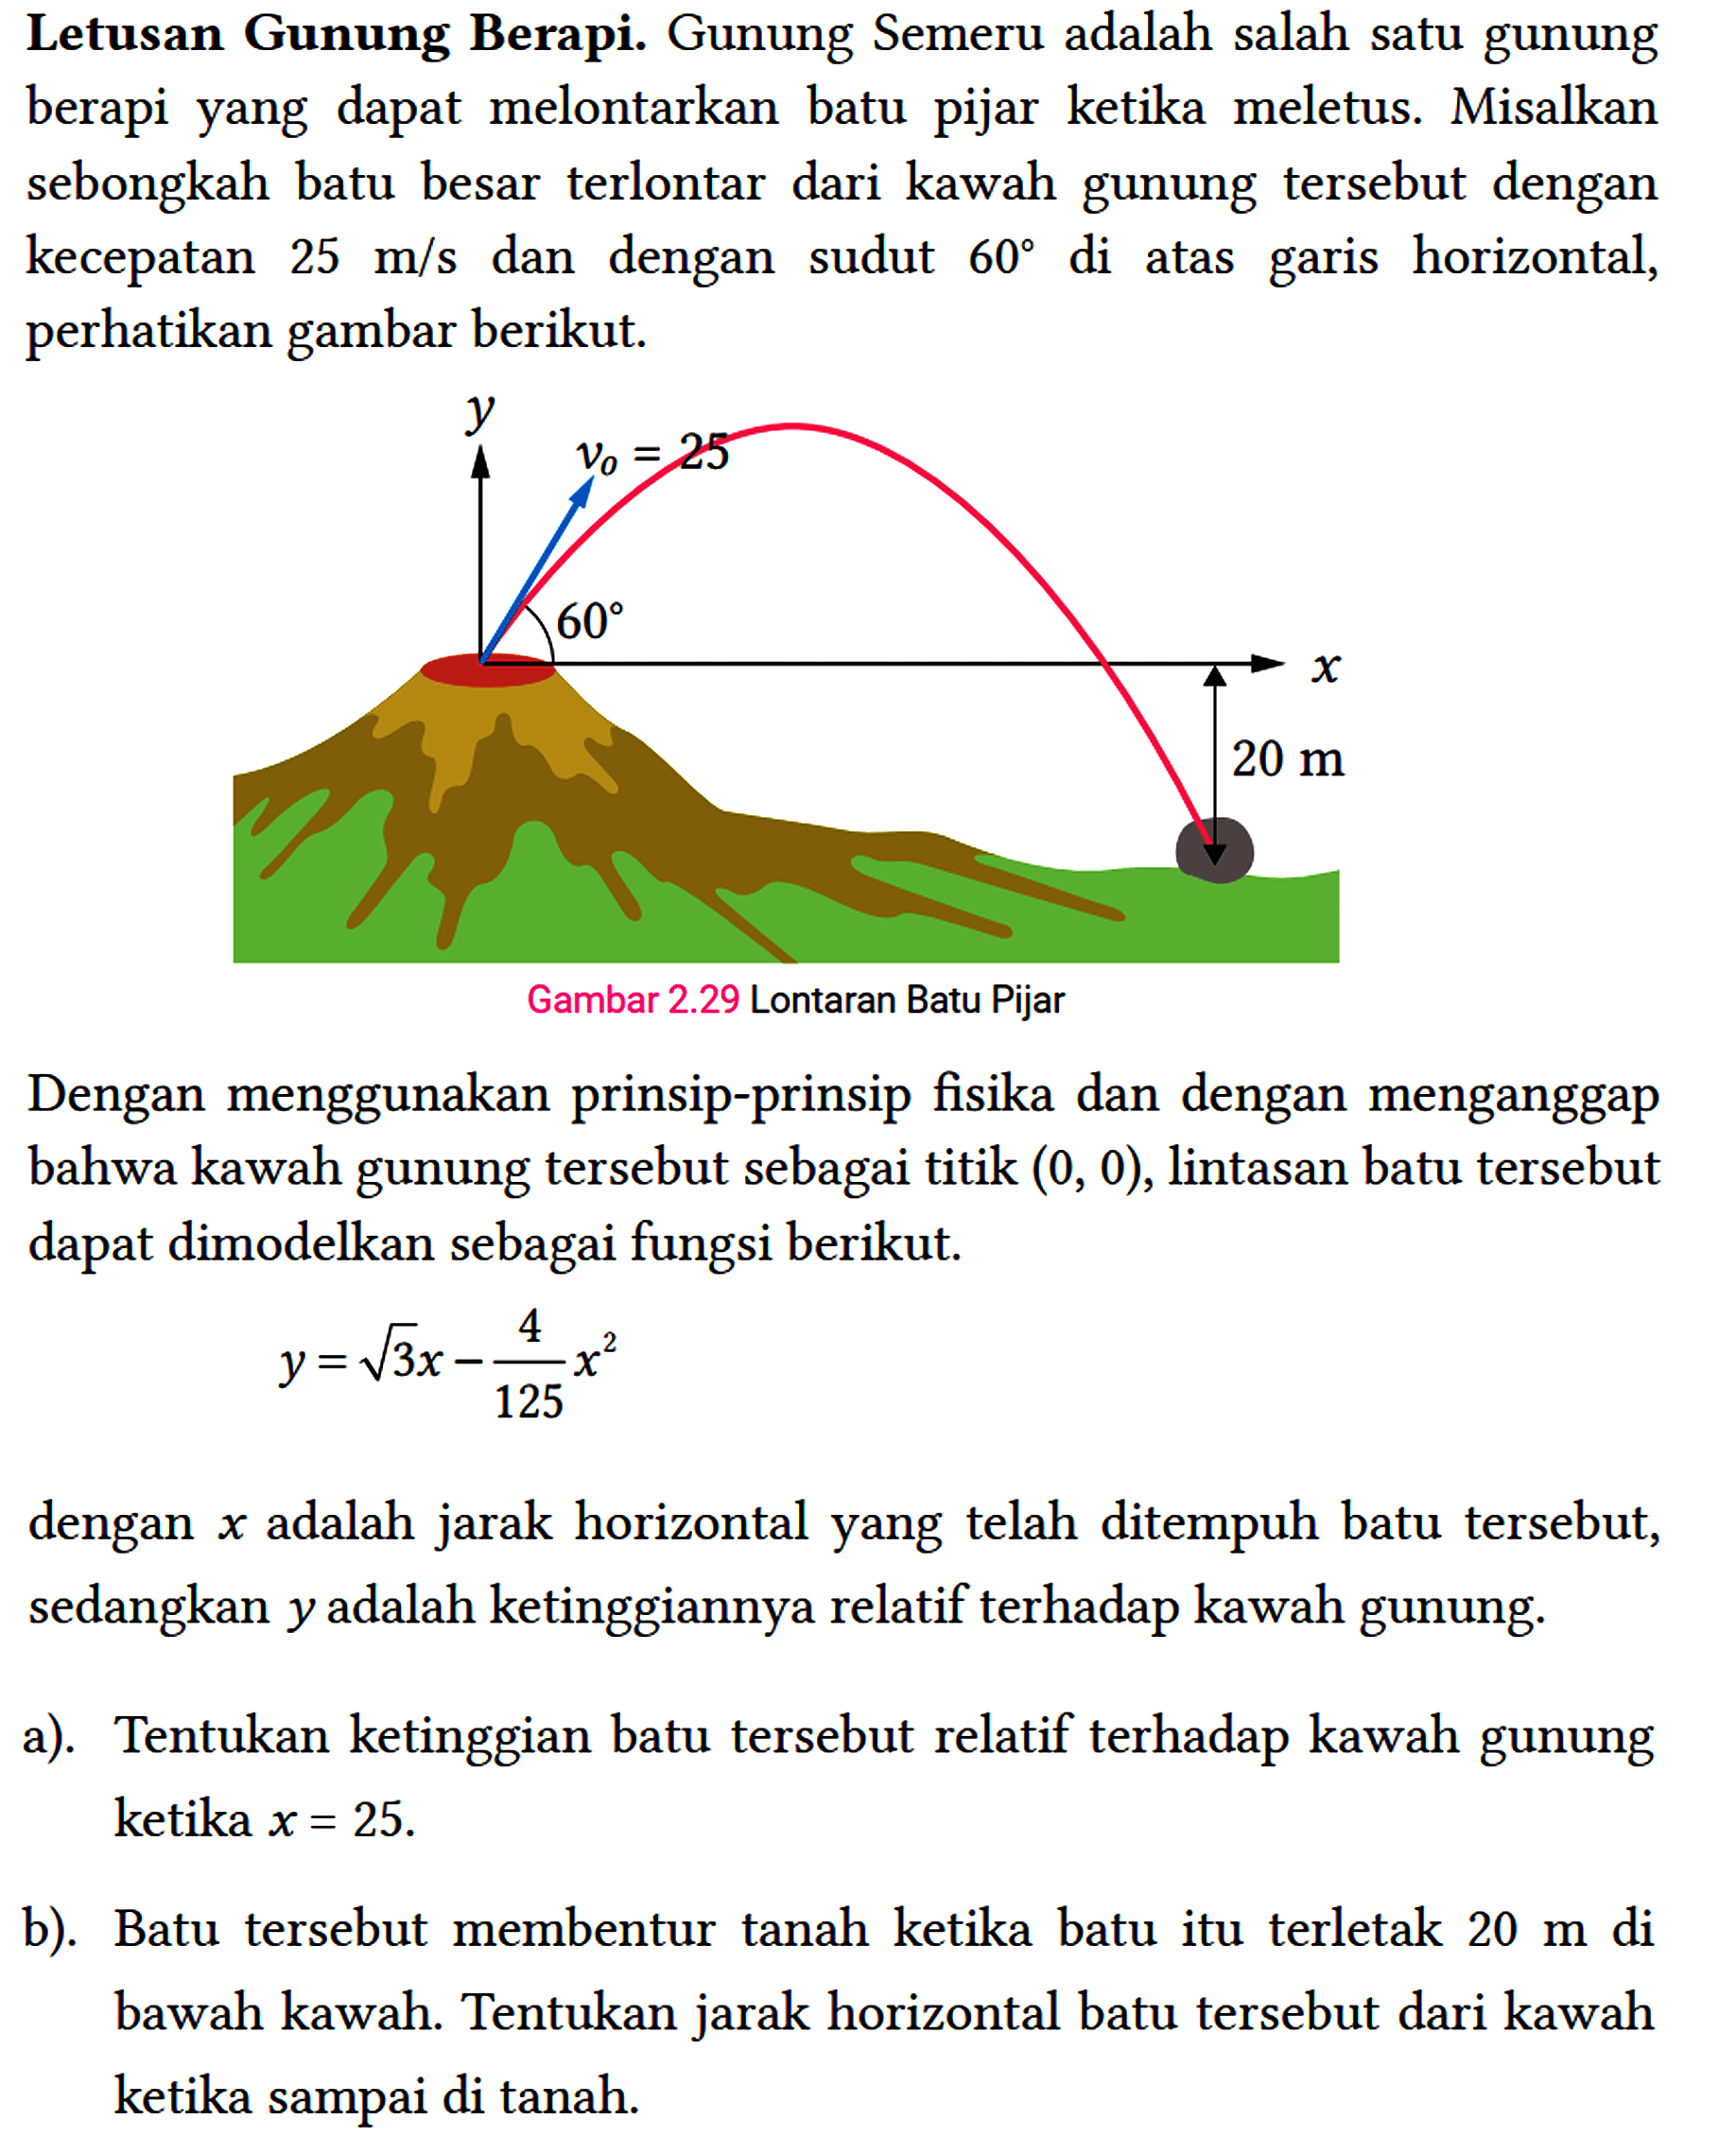 Letusan Gunung Berapi. Gunung Semeru adalah salah satu gunung berapi yang dapat melontarkan batu pijar ketika meletus. Misalkan sebongkah batu besar terlontar dari kawah gunung tersebut dengan kecepatan 25 m / s dan dengan sudut 60 di atas garis horizontal, perhatikan gambar berikut.
 
 Dengan menggunakan prinsip-prinsip fisika dan dengan menganggap bahwa kawah gunung tersebut sebagai titik (0,0) , lintasan batu tersebut dapat dimodelkan sebagai fungsi berikut.
 
 y=akar(3) x-(4)/(125) x^(2)
 
 dengan x adalah jarak horizontal yang telah ditempuh batu tersebut, sedangkan y adalah ketinggiannya relatif terhadap kawah gunung.
 a). Tentukan ketinggian batu tersebut relatif terhadap kawah gunung ketika x=25 .
 b). Batu tersebut membentur tanah ketika batu itu terletak 20 m di bawah kawah. Tentukan jarak horizontal batu tersebut dari kawah ketika sampai di tanah.